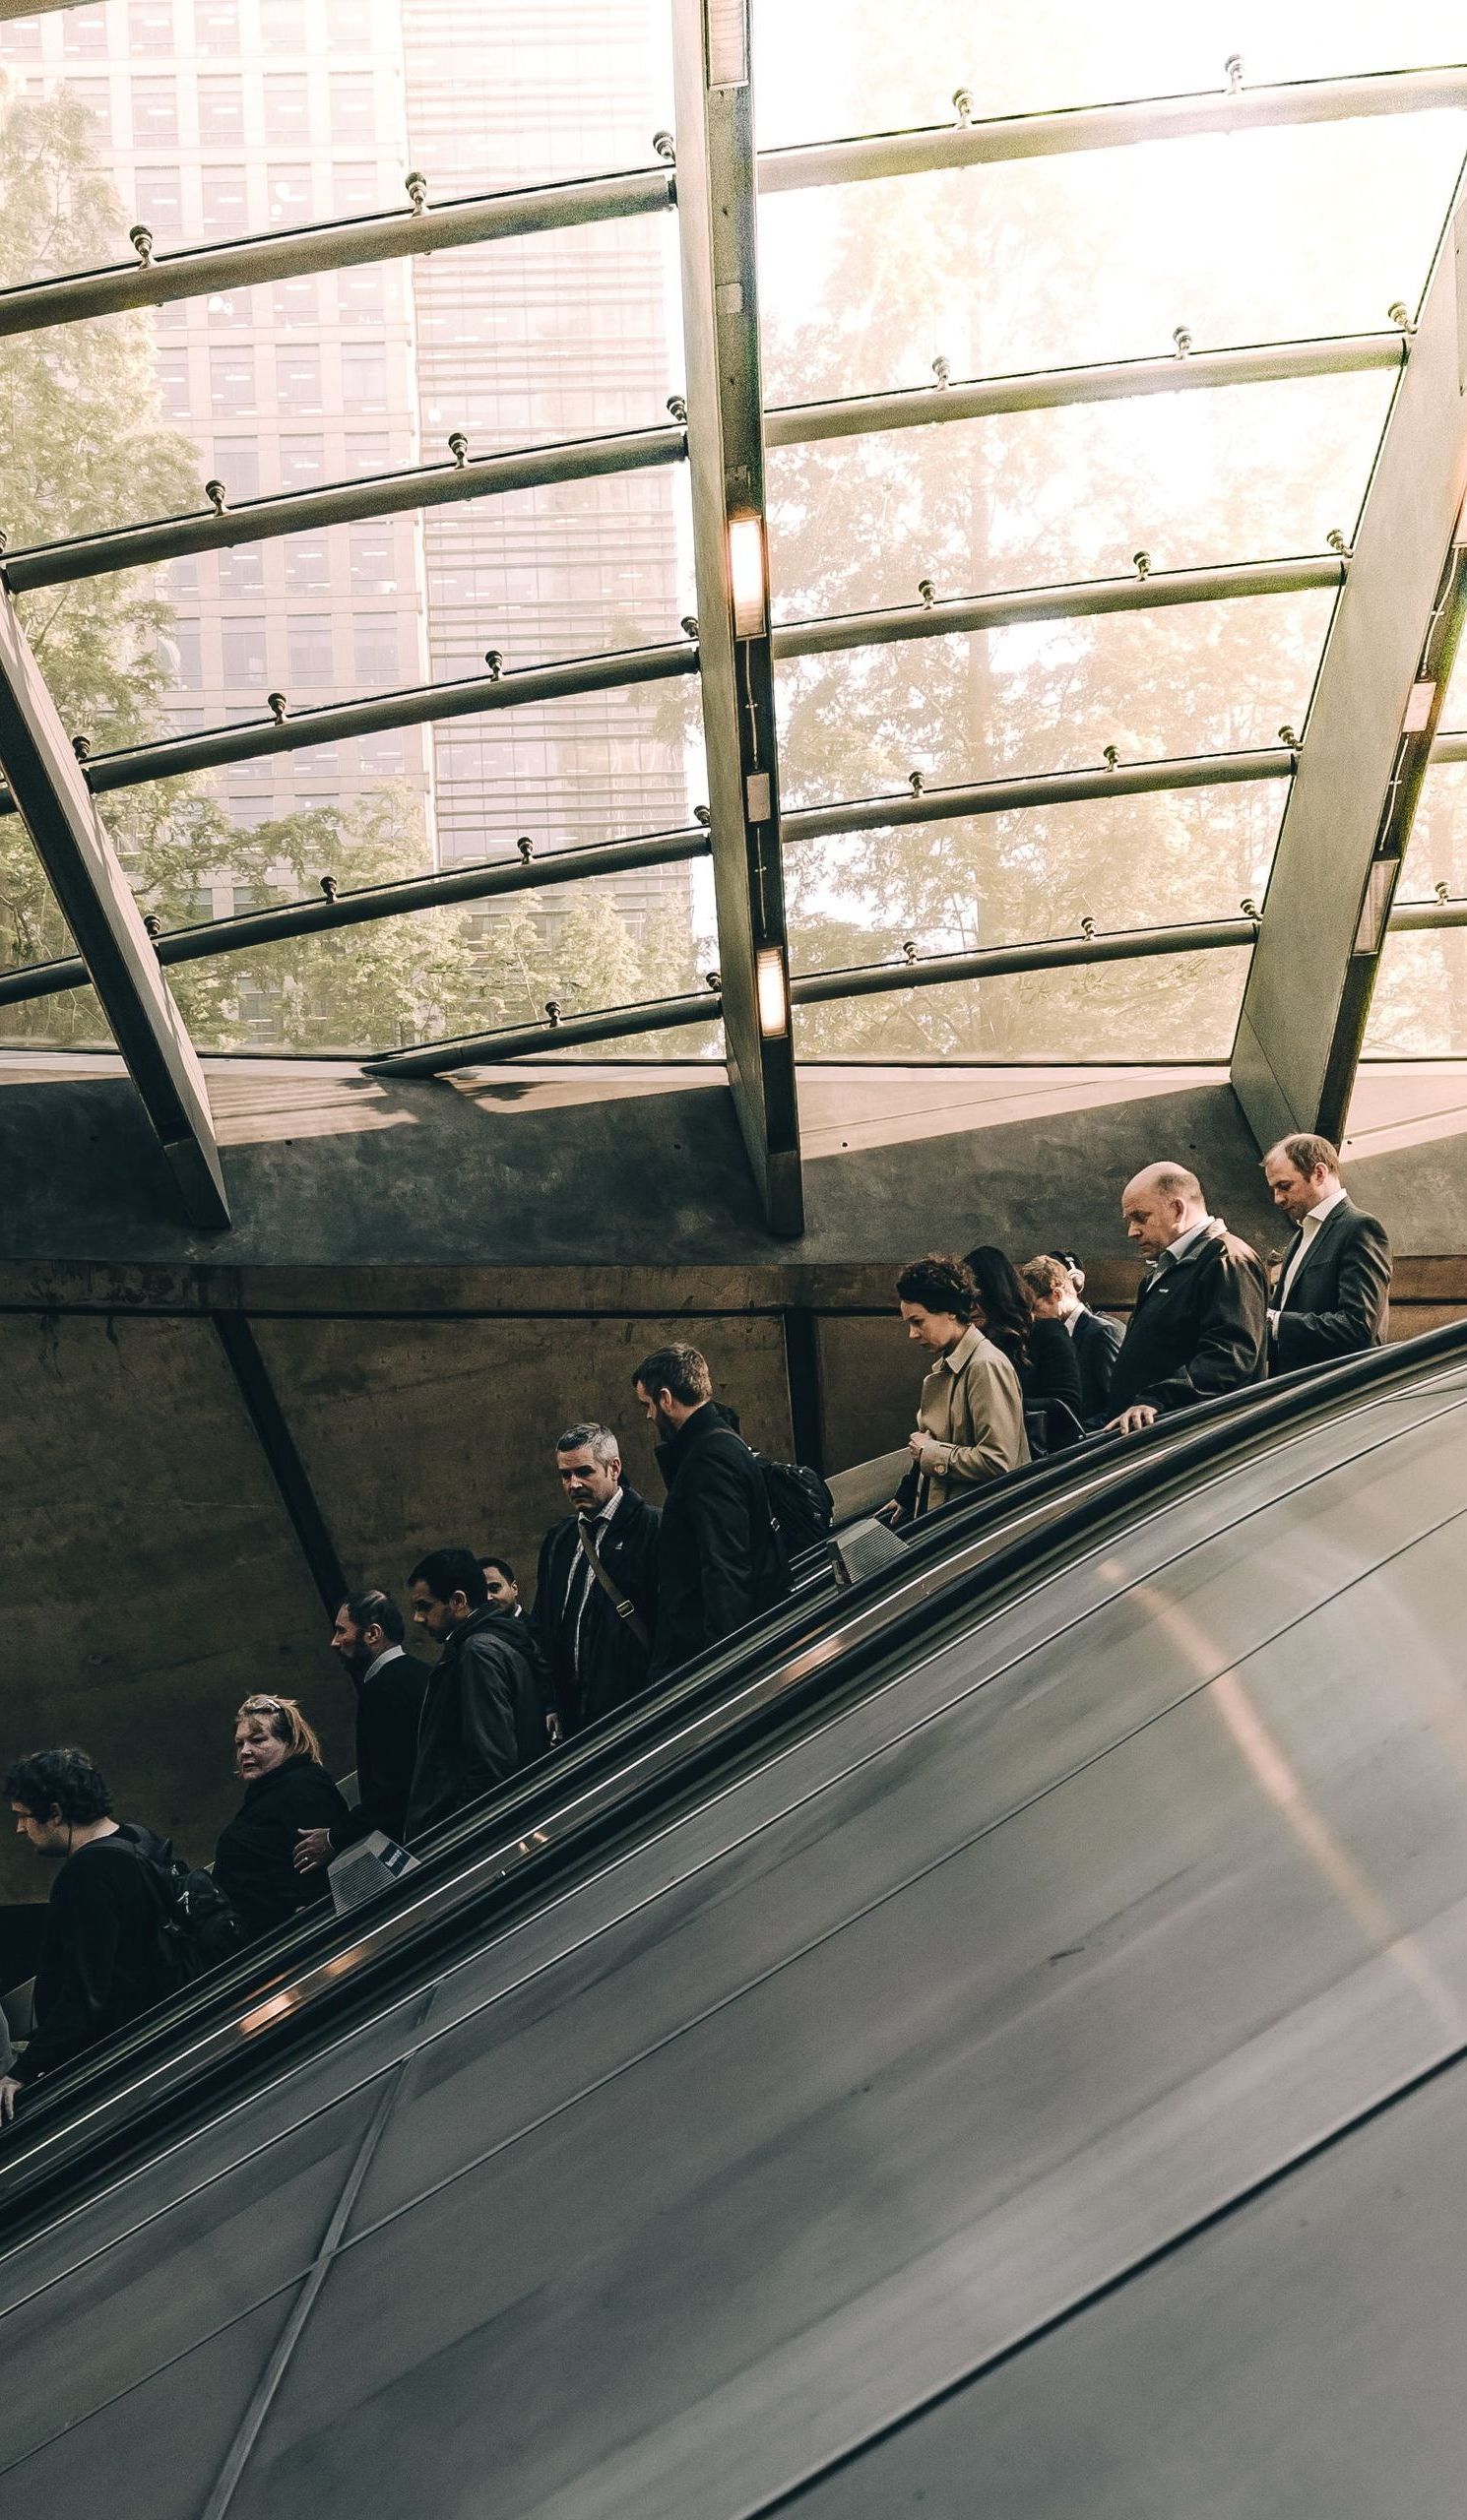 business people on an escalator